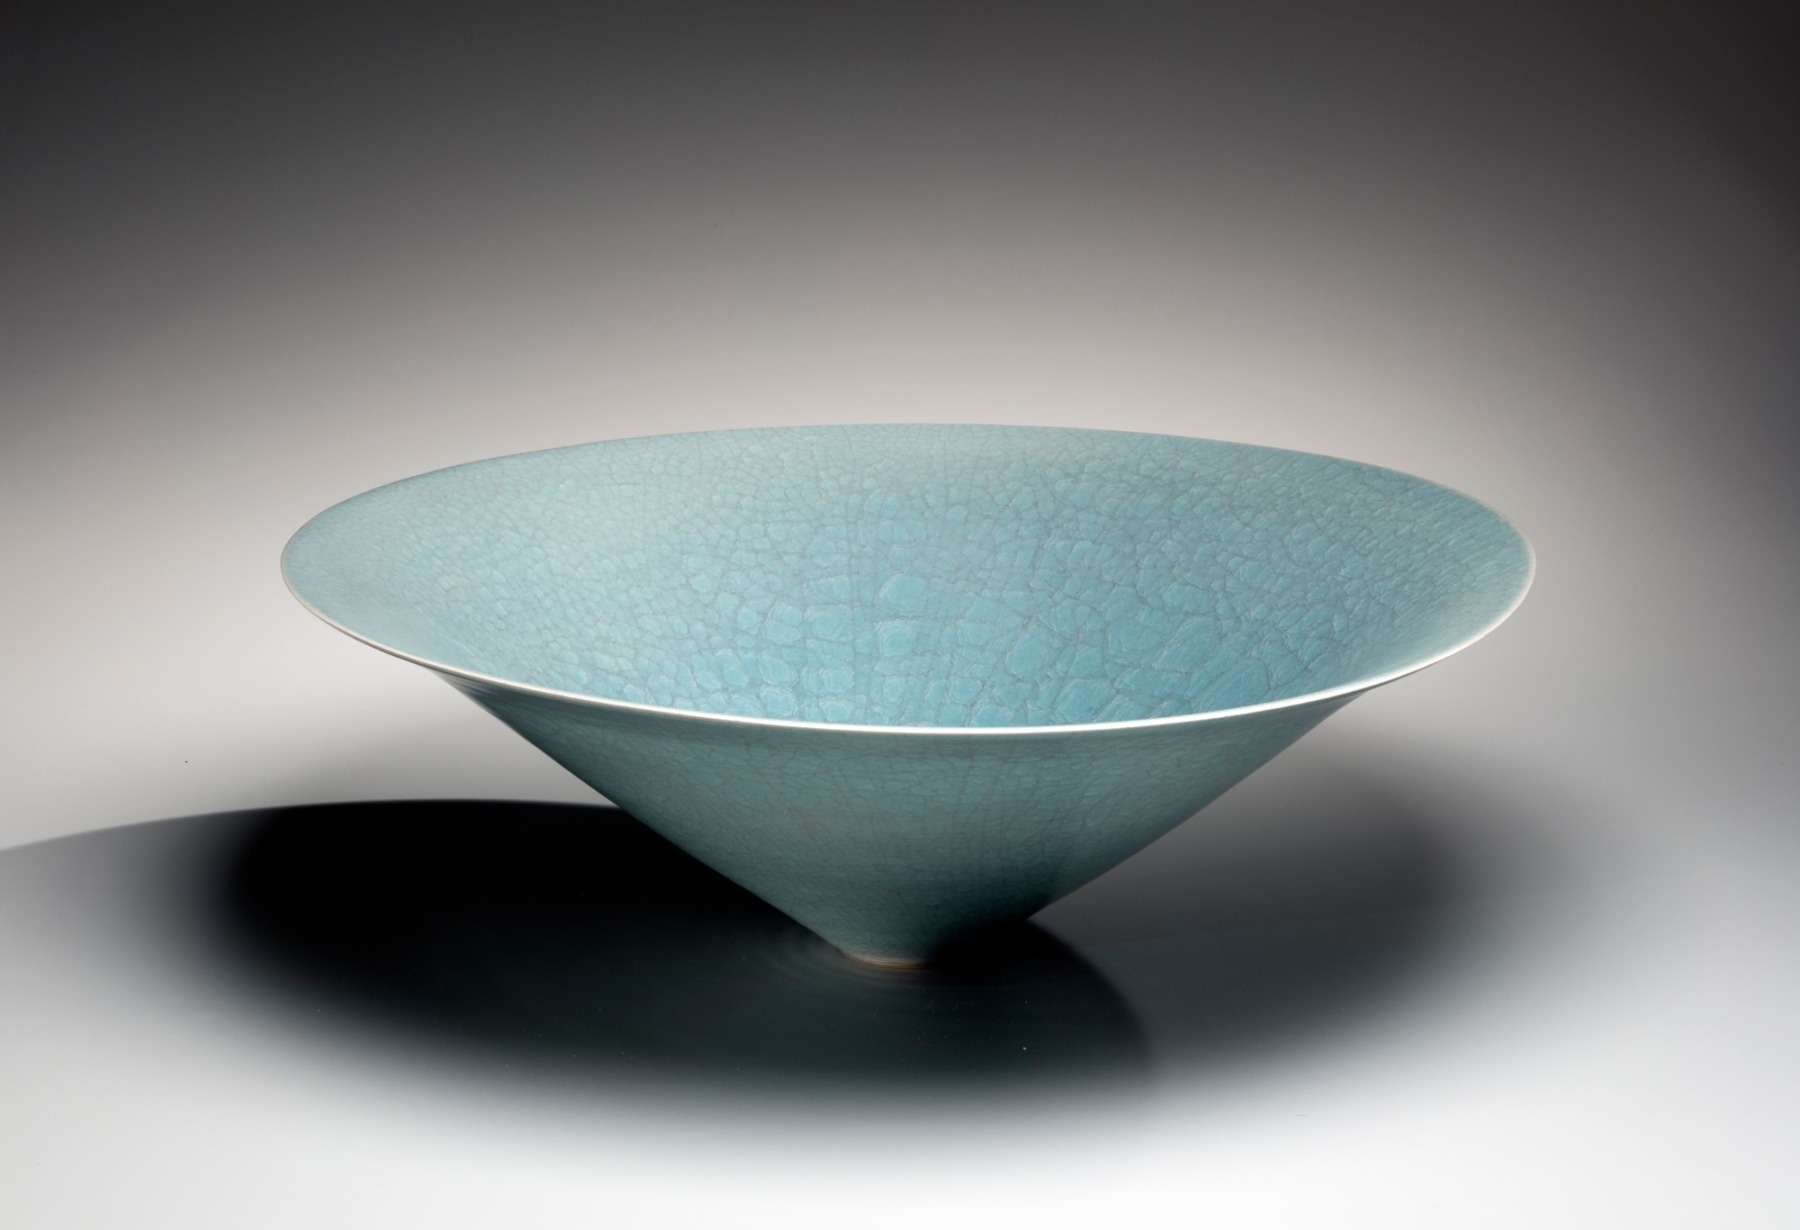 Conical bowl with craquelure celadon glazing, 2019